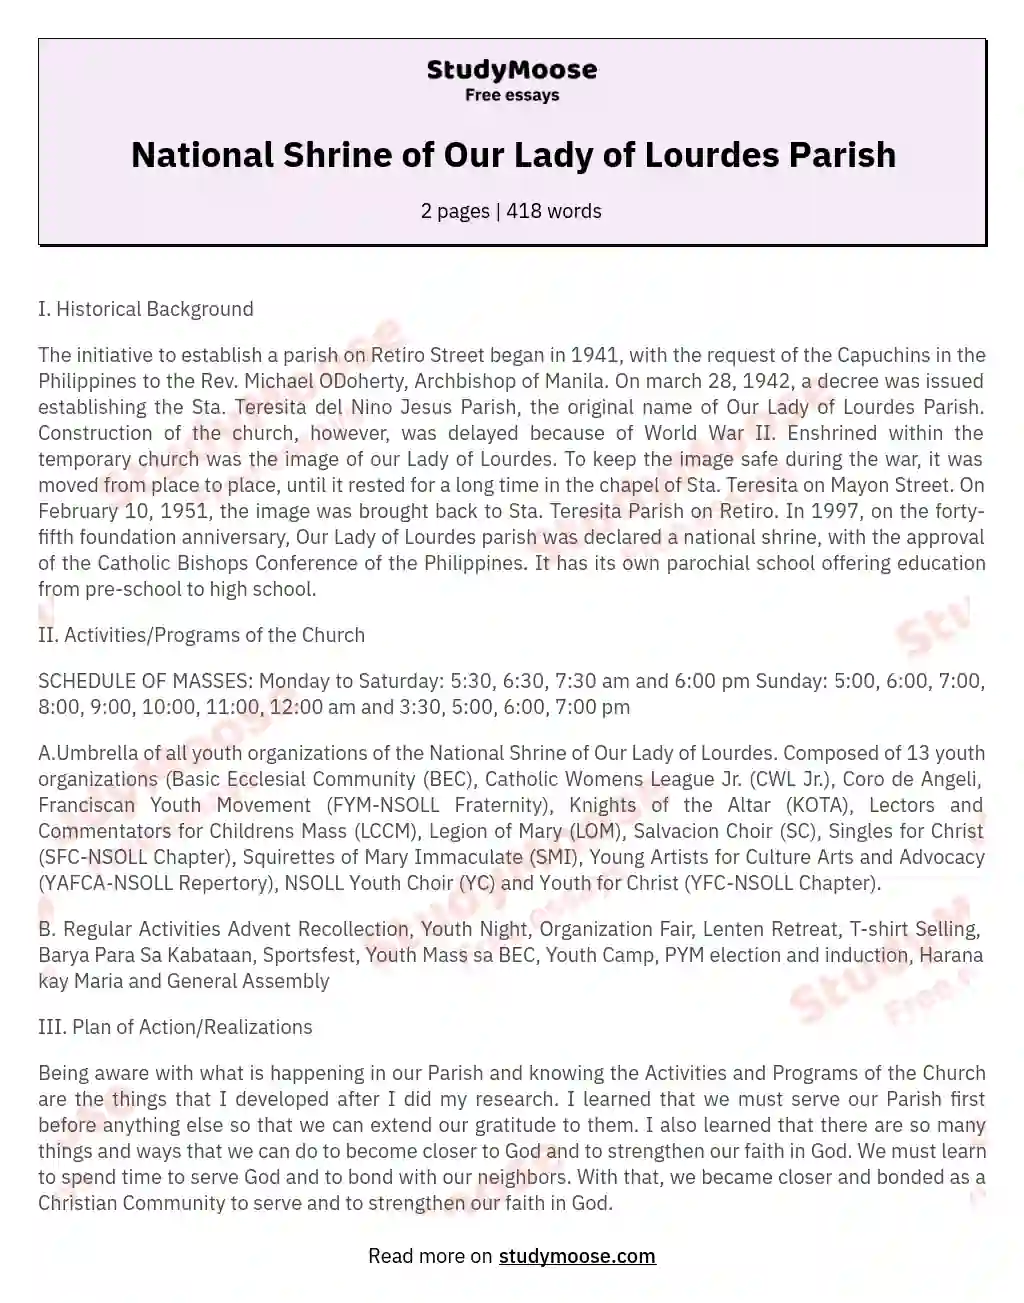 National Shrine of Our Lady of Lourdes Parish essay